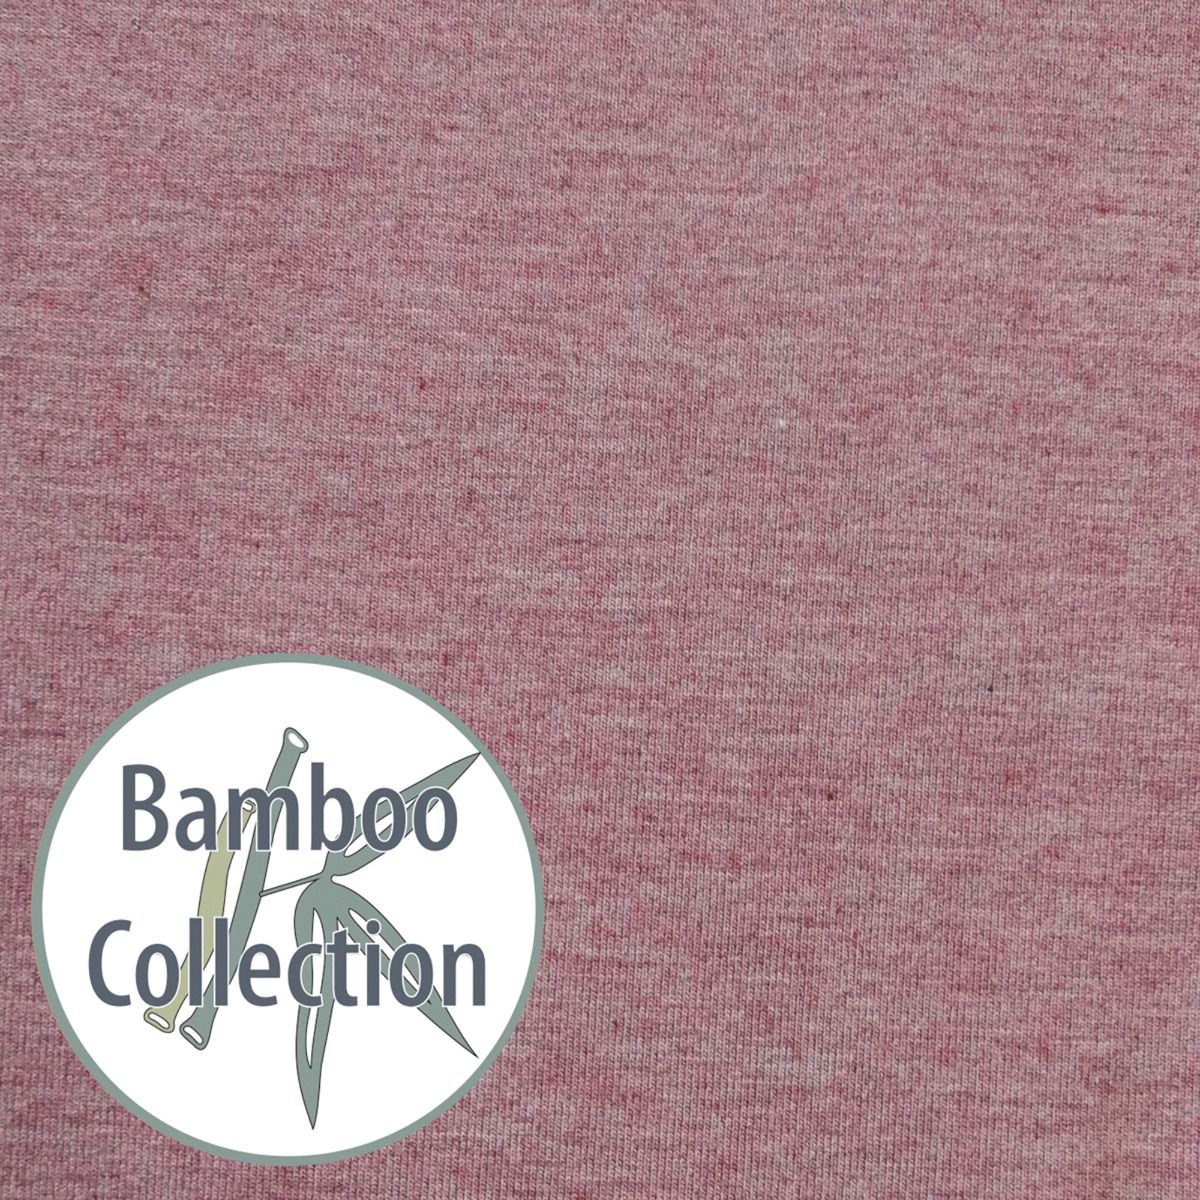 Cuscino per bambini Theraline Bamboo Collection